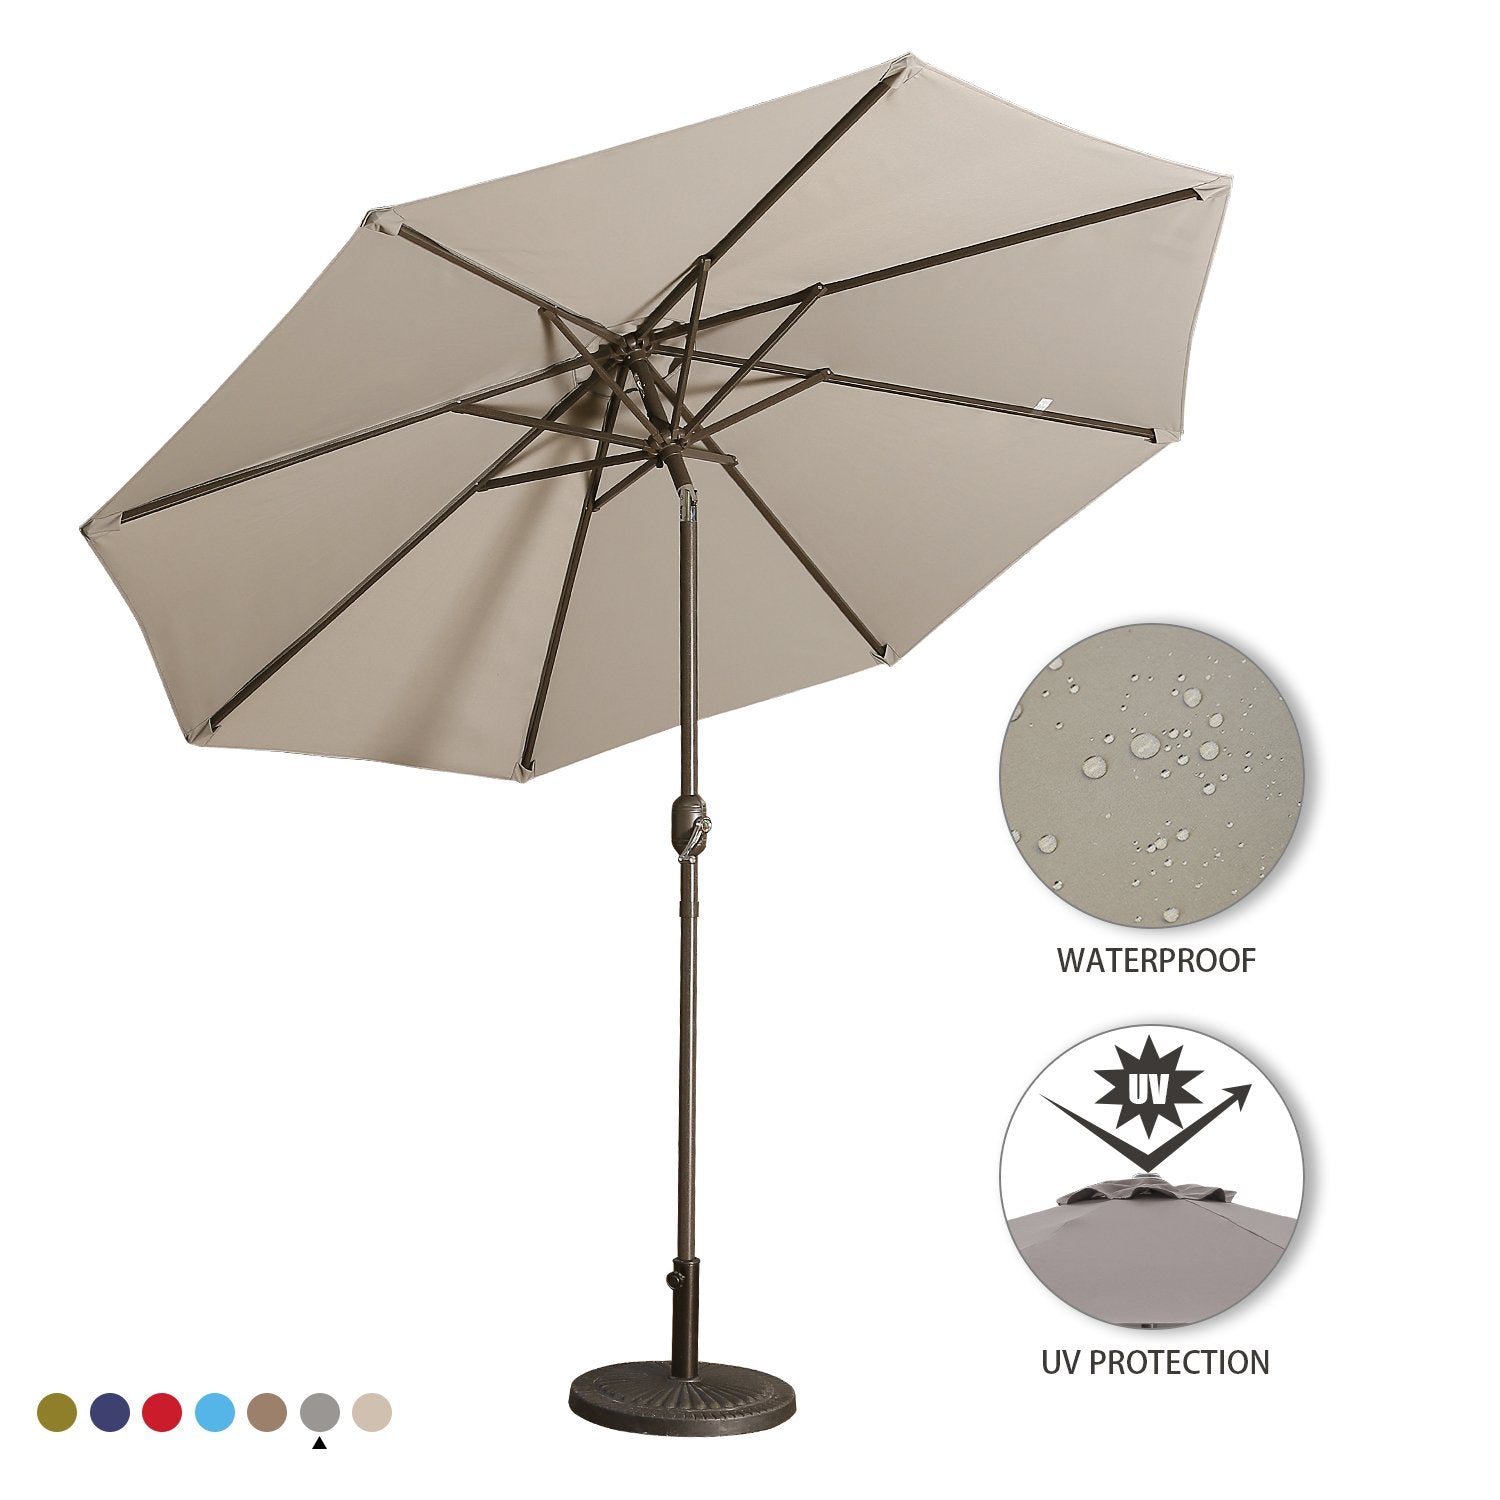 Clihome 9ft Patio Umbrella Outdoor Umbrella Patio Market Umbrella with Push Button Tilt and Crank